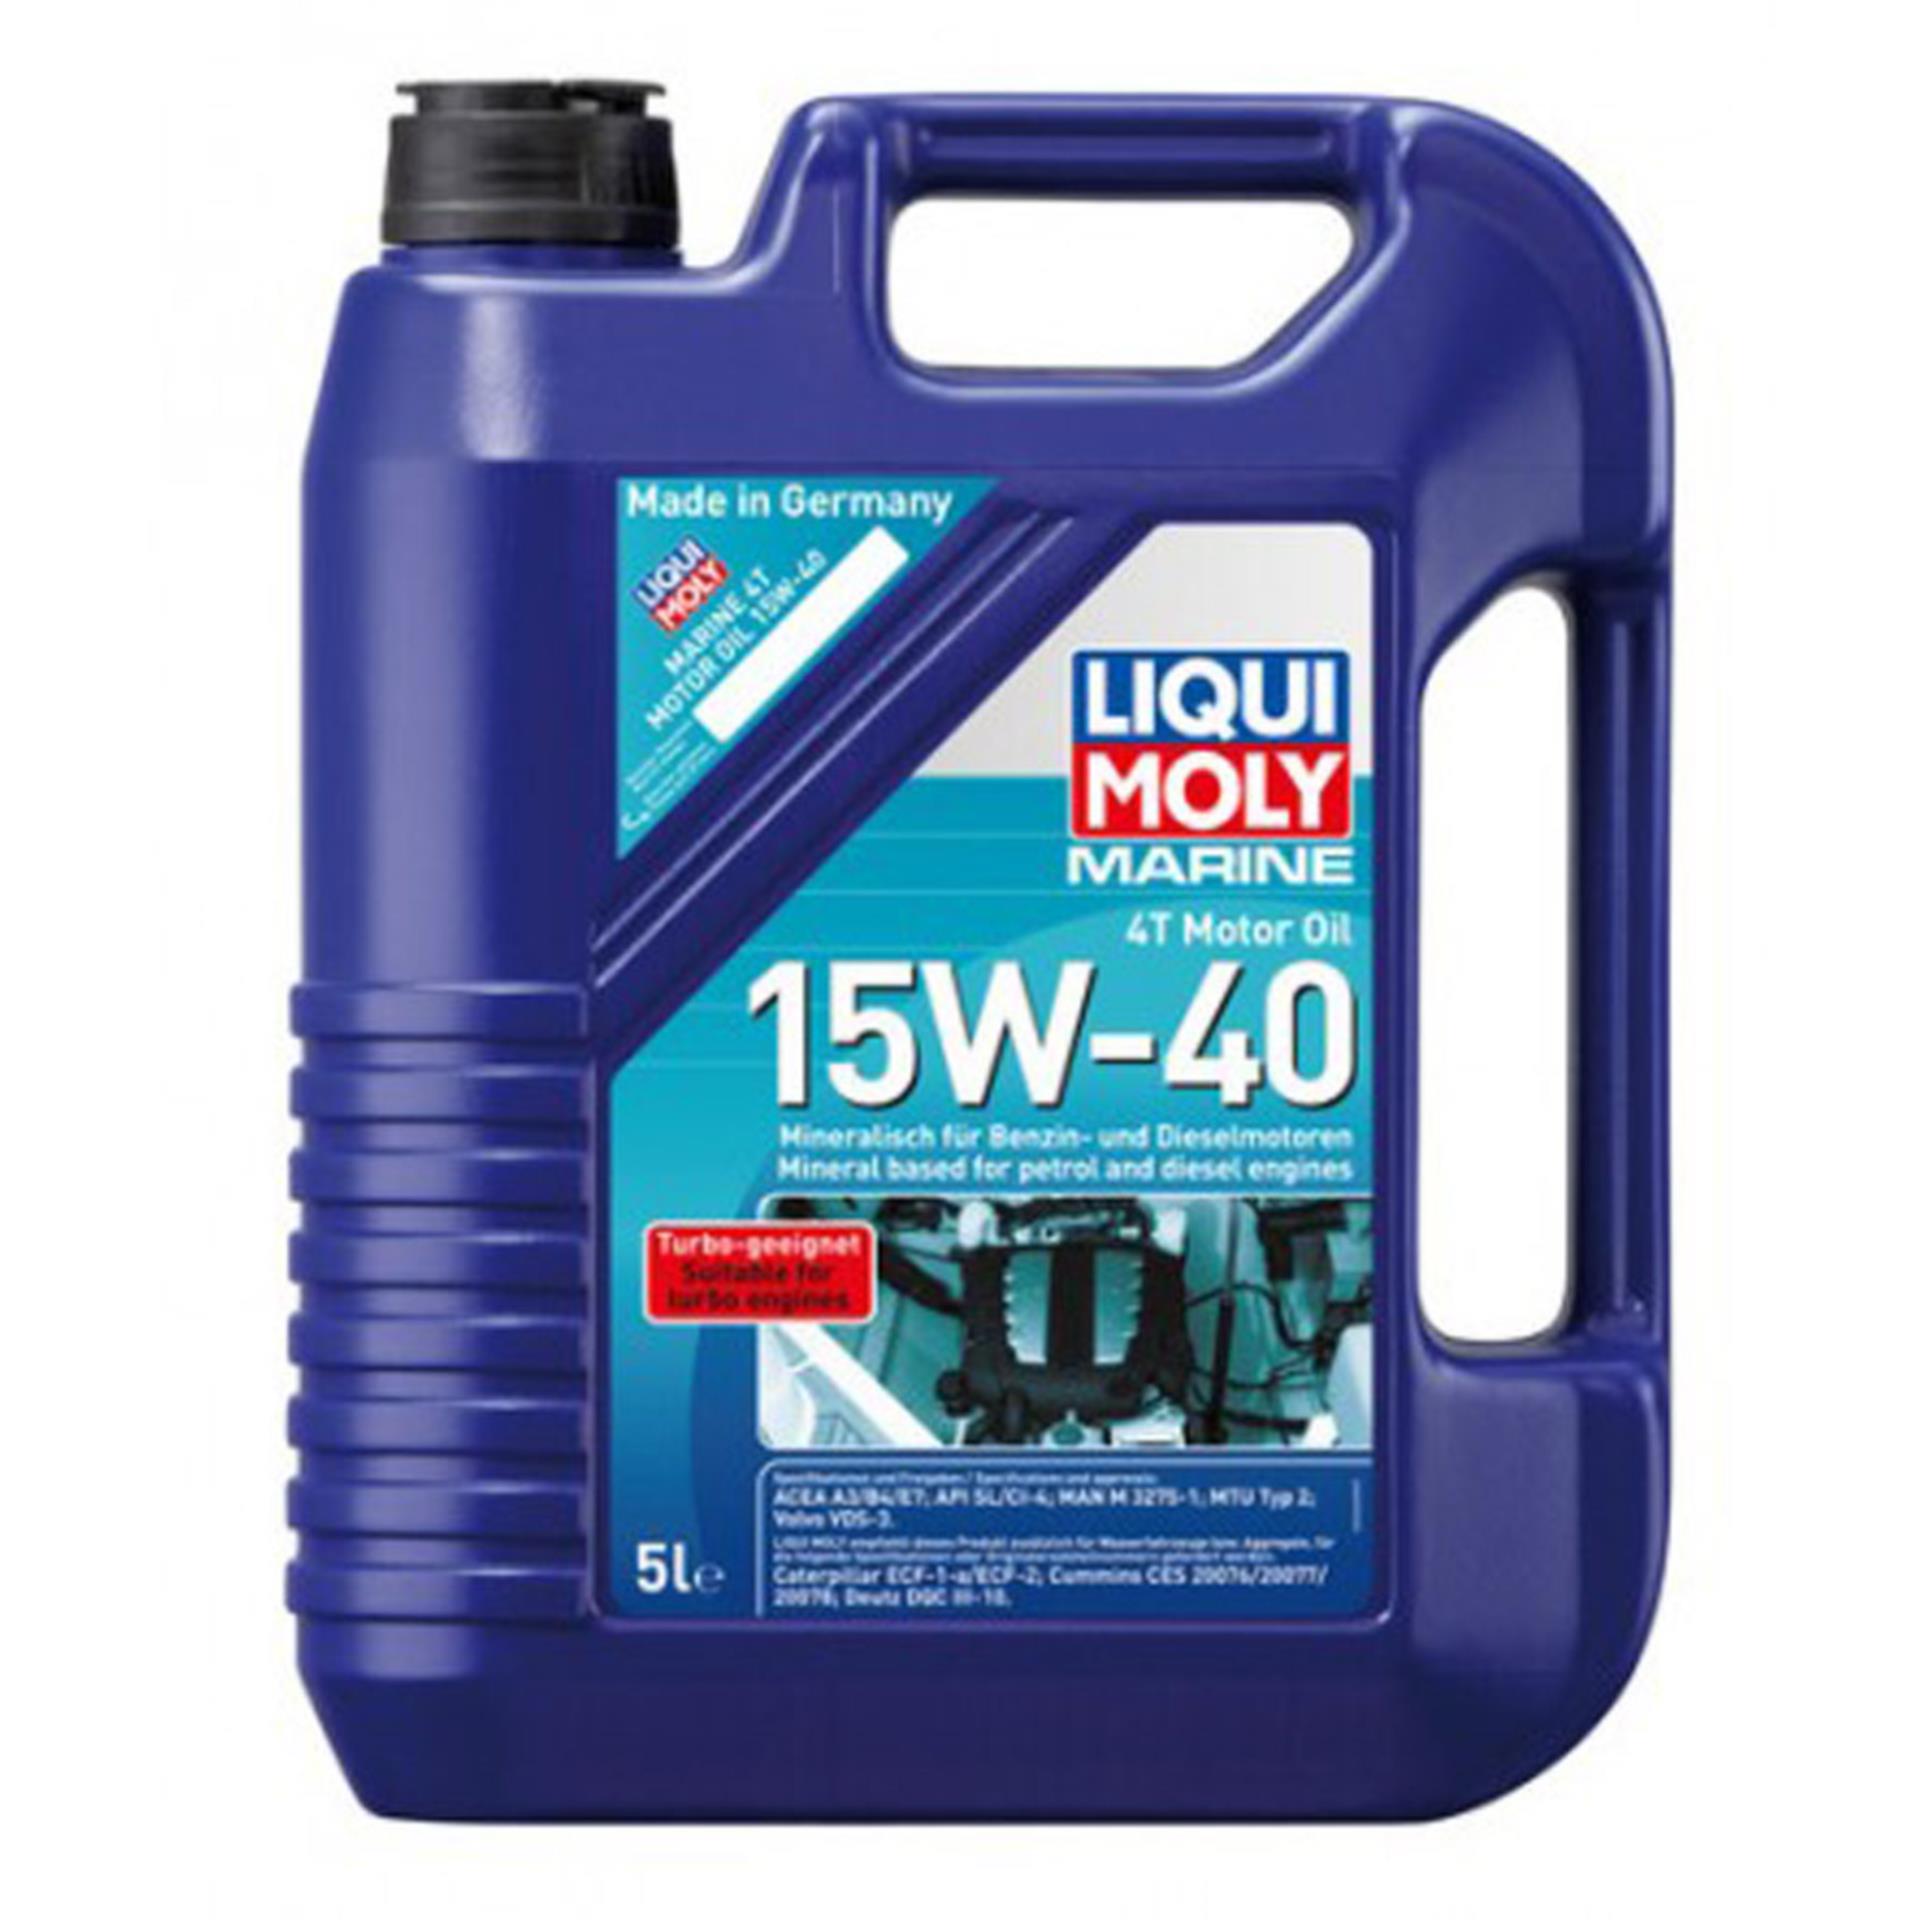 Liqui Moly 4T Motor Oil 15W-40, 5 Liter